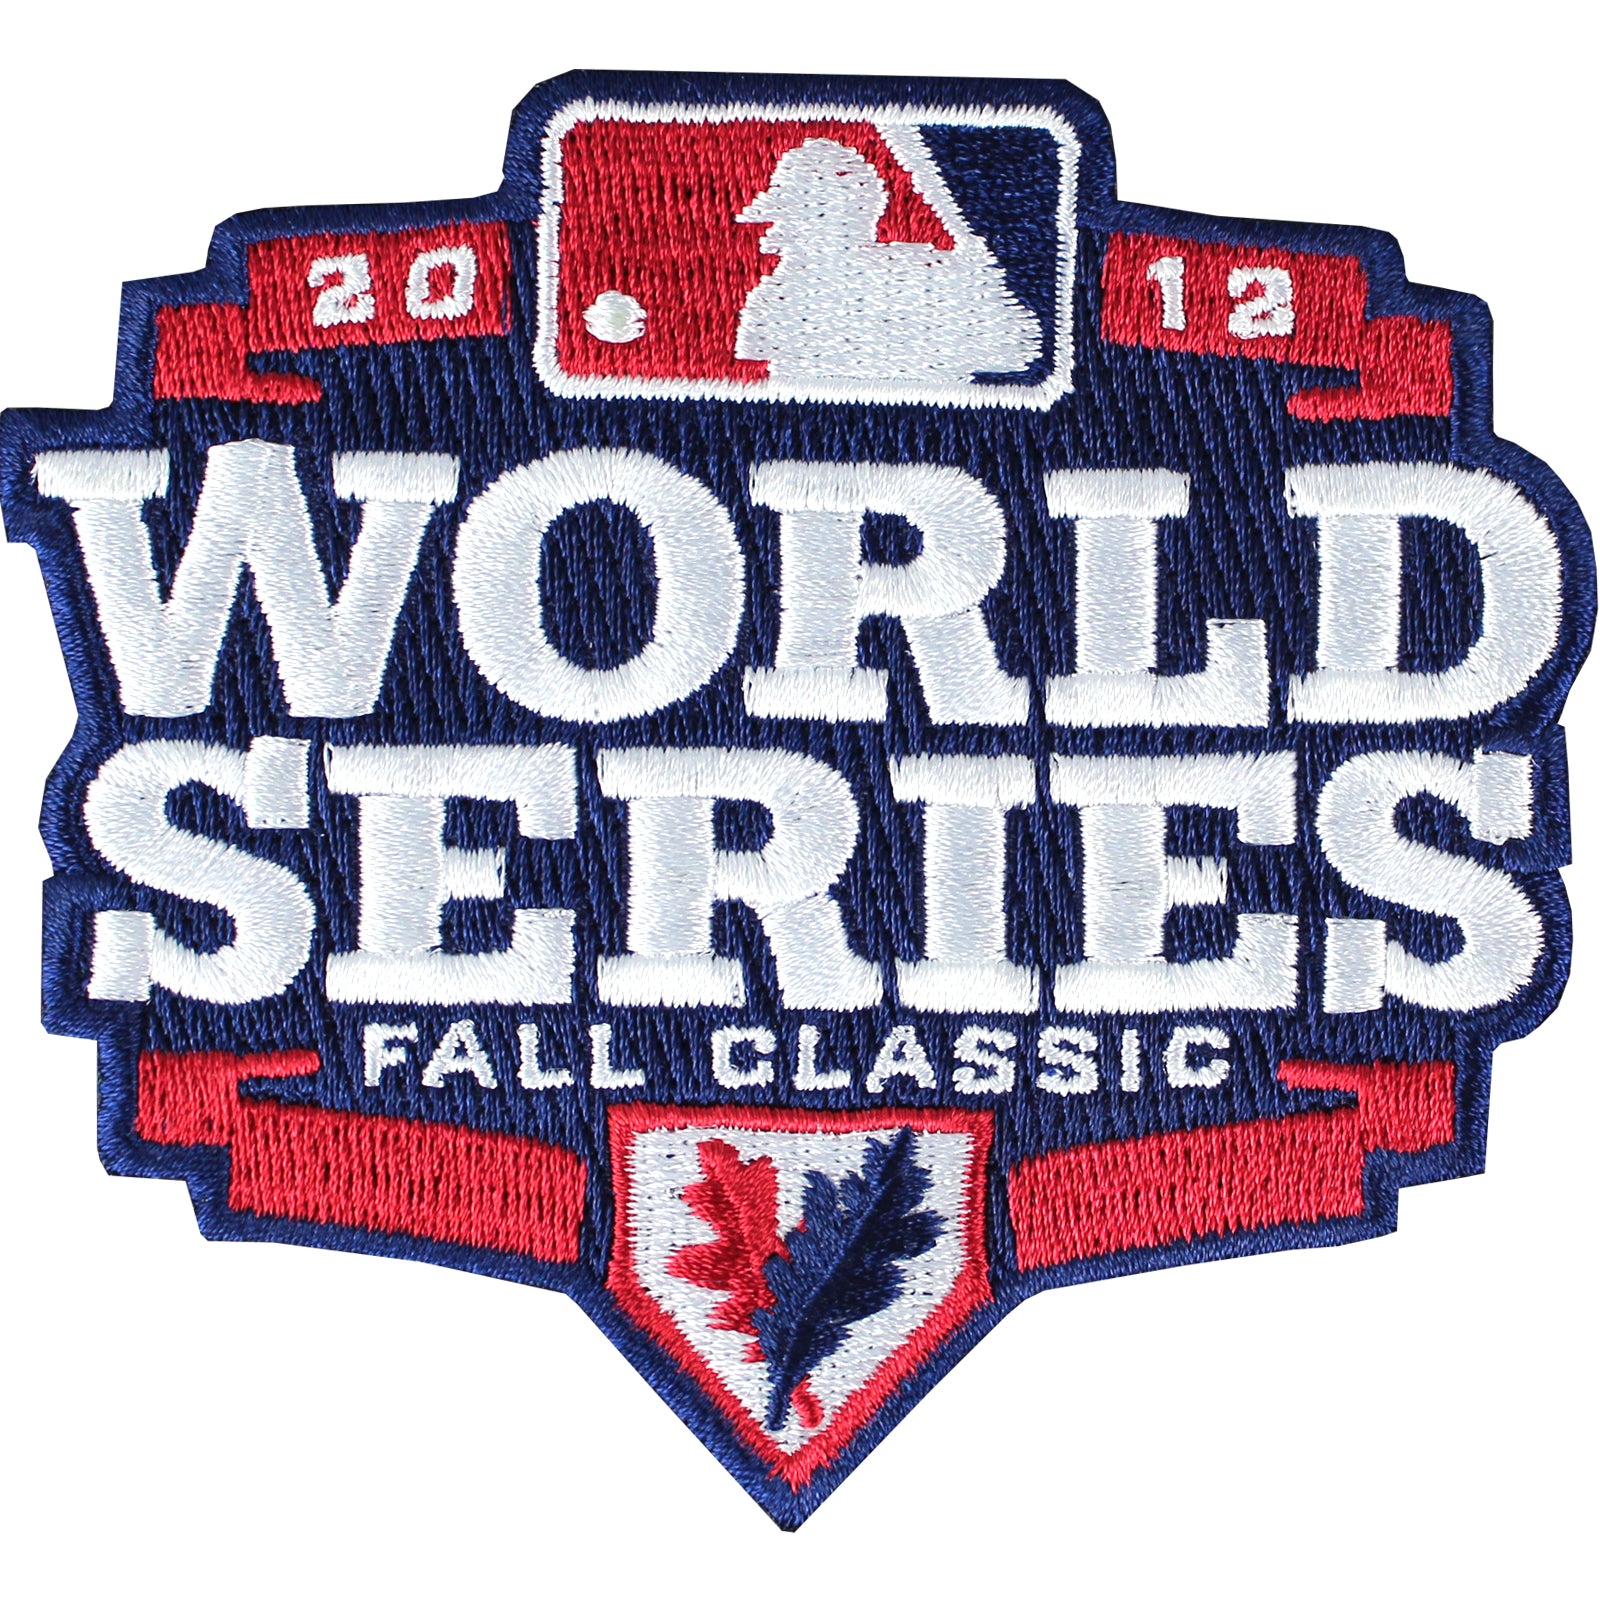 2012 MLB World Series Patch